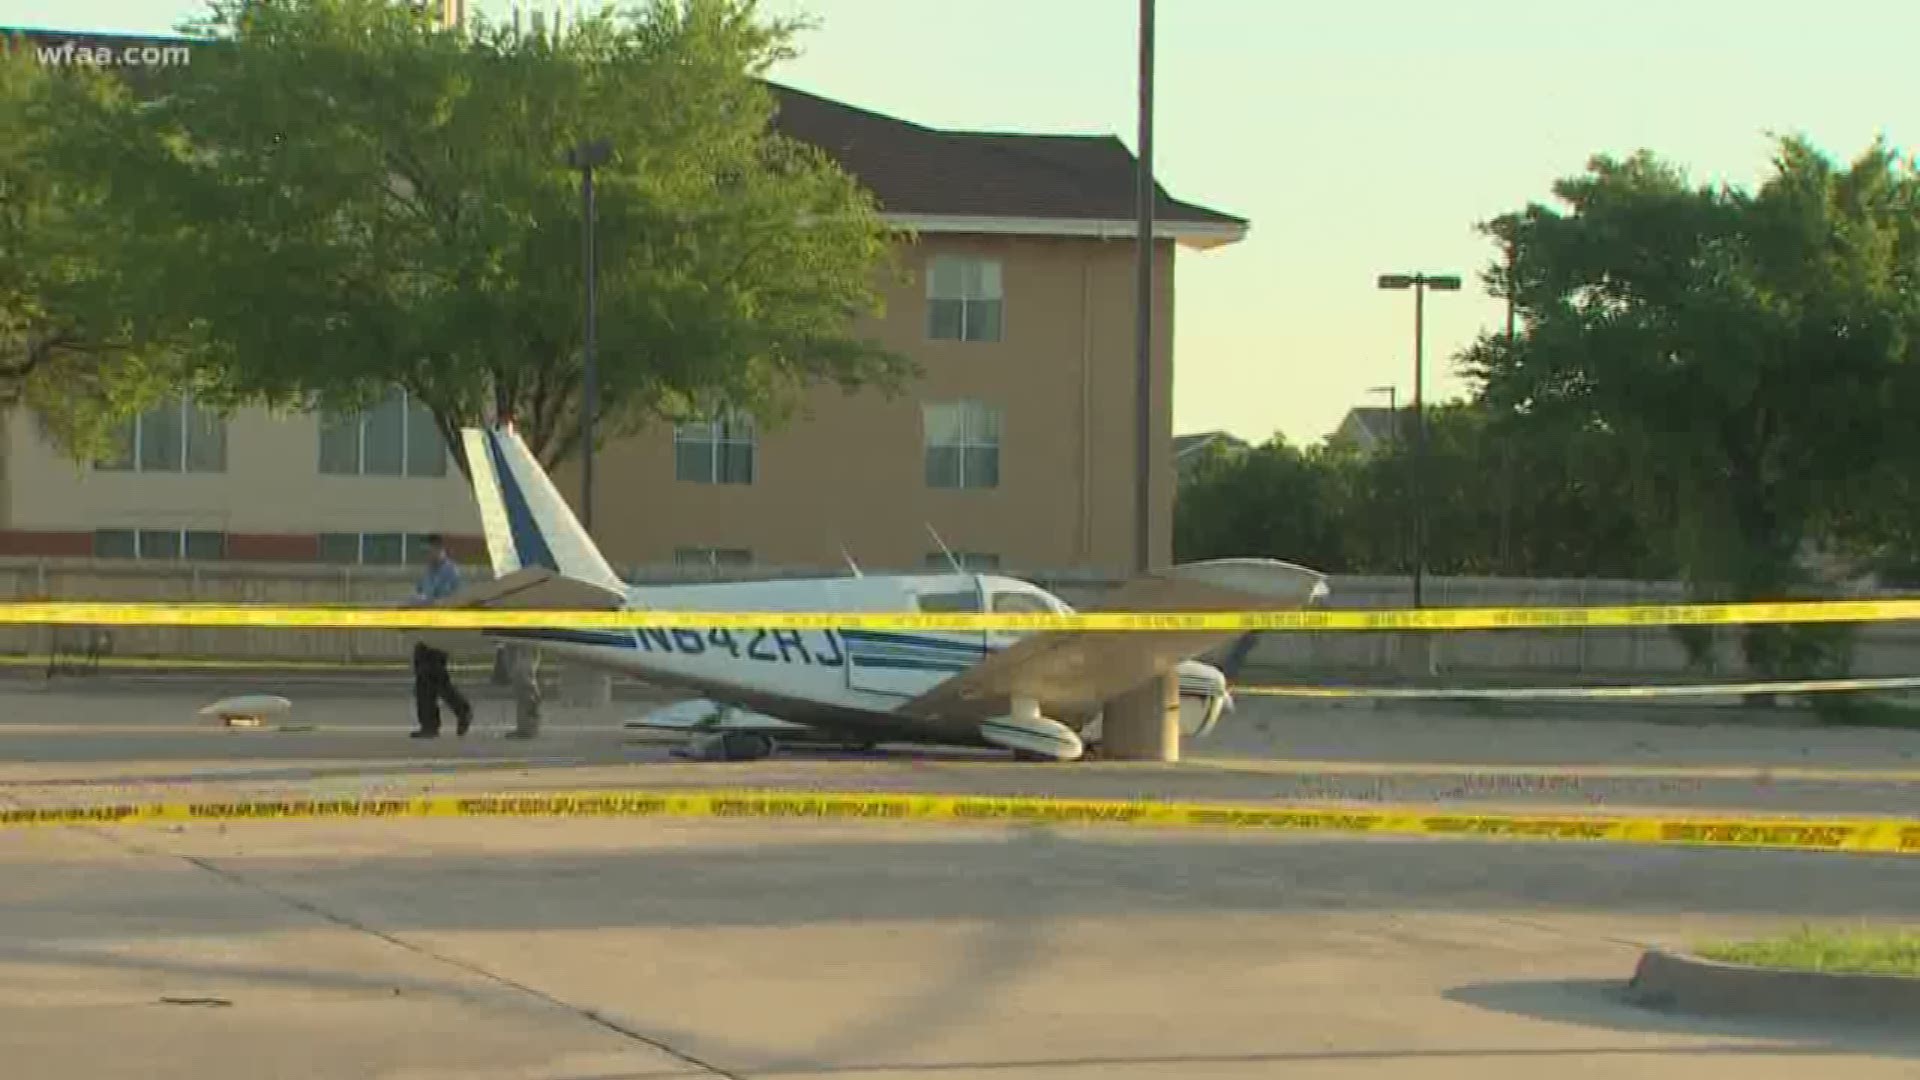 FAA investigating small plane crash landing